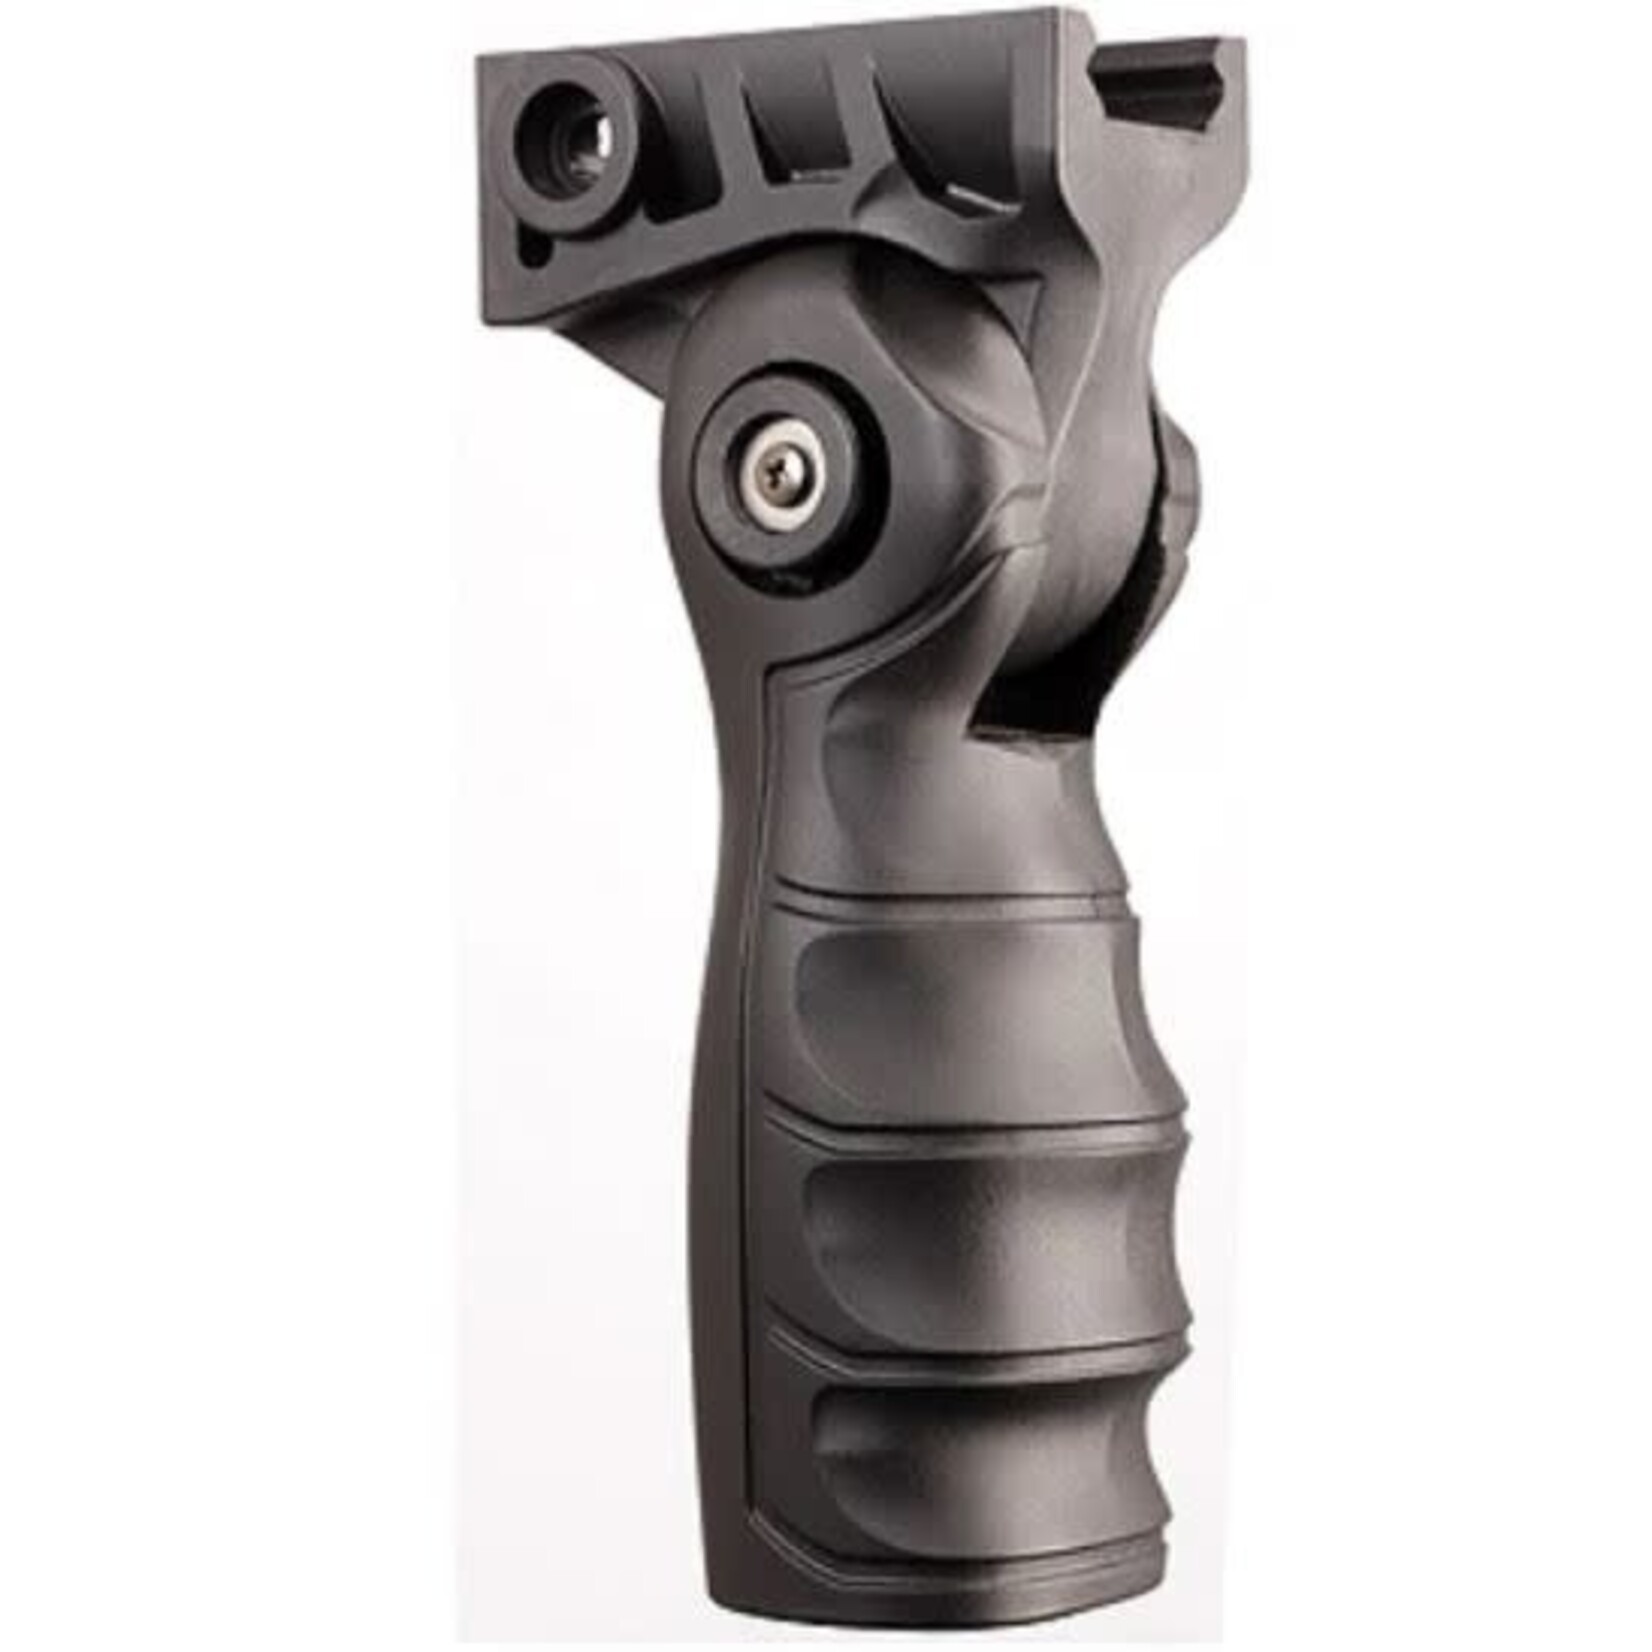 ATI ATI 3-Position Forend Pistol Grip for Picatinny Rail